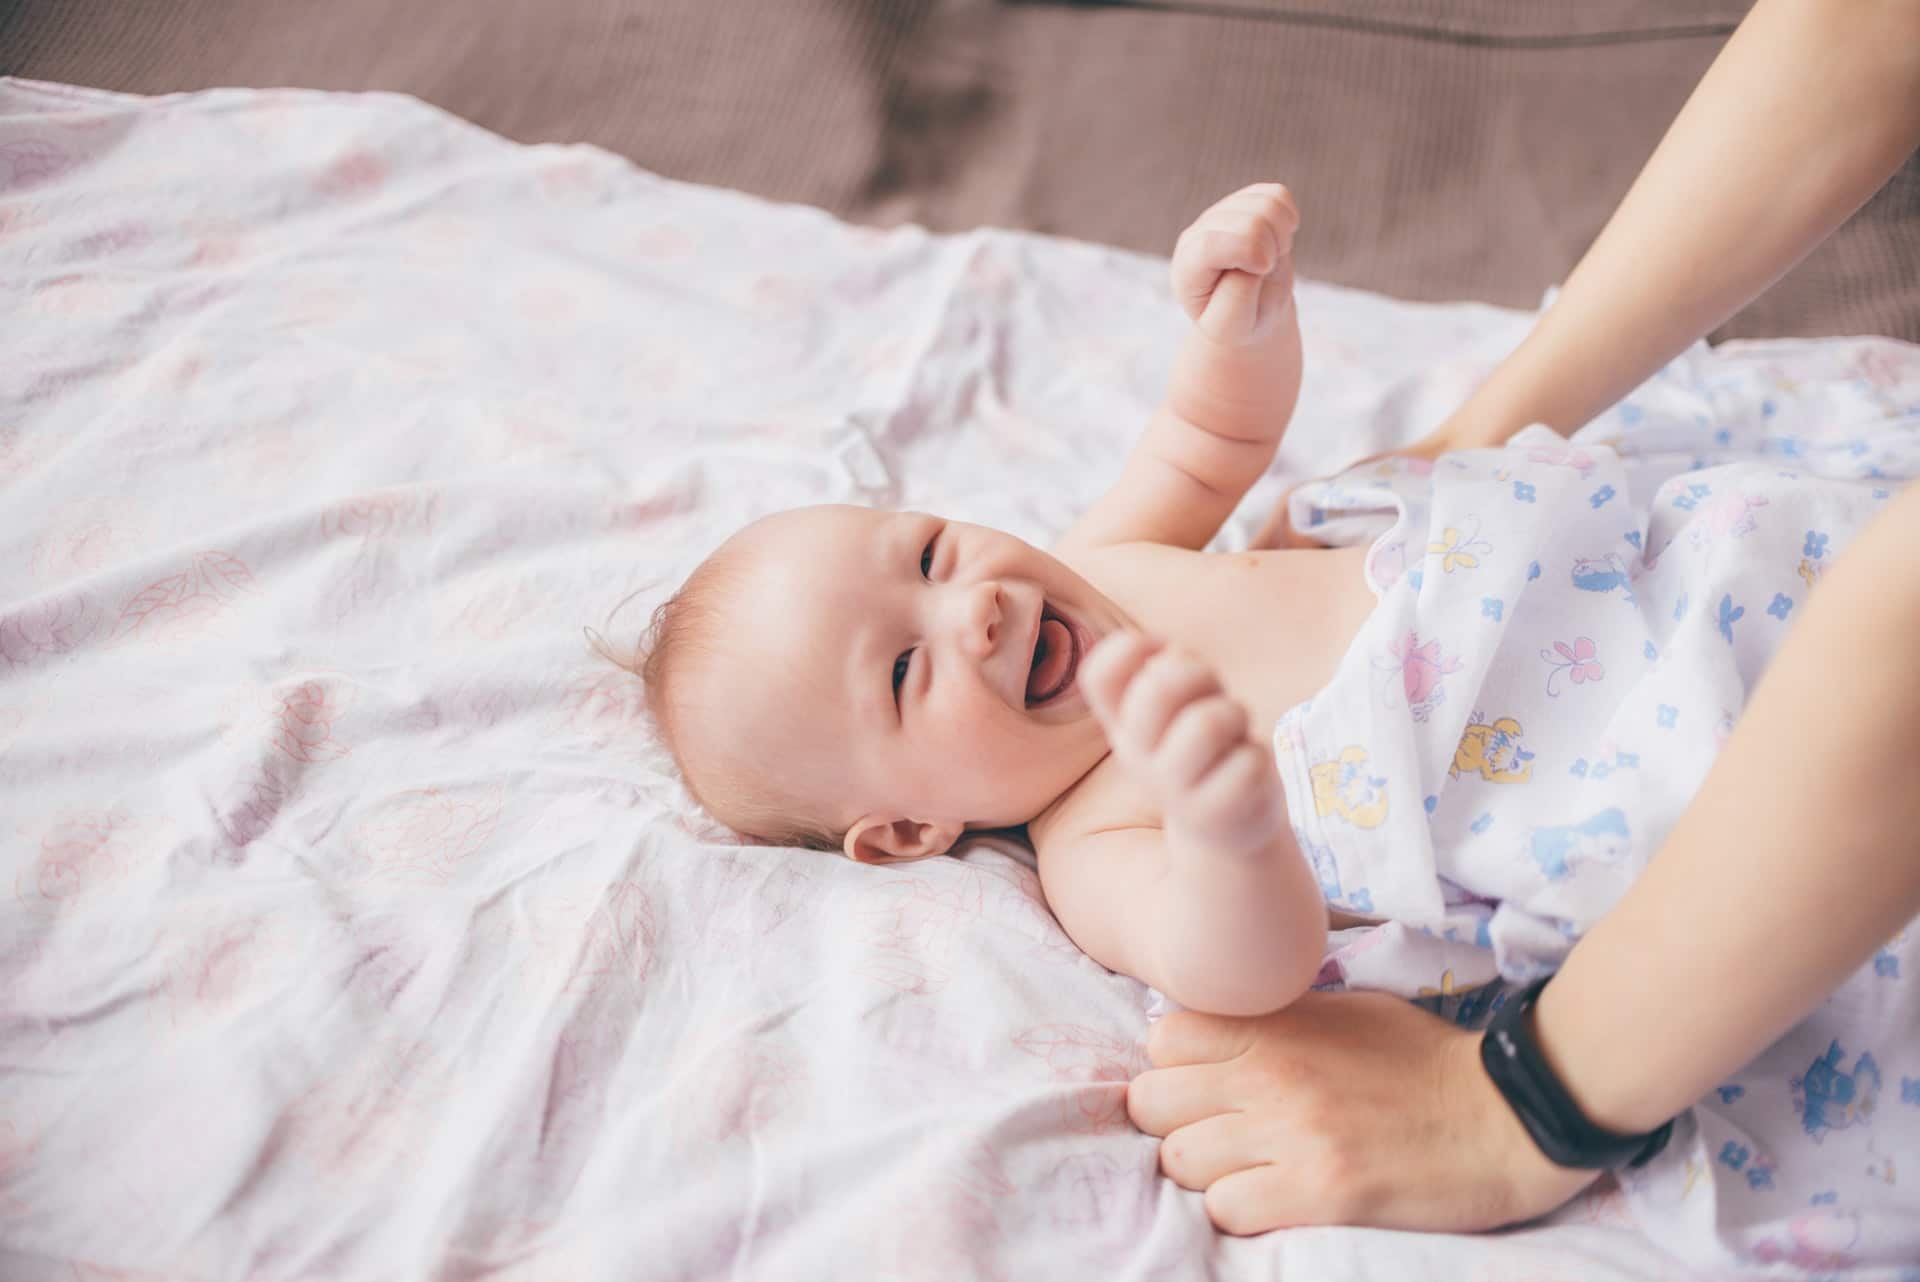 daniil silantev vJH a prTA4 unsplash - When do Babies Stop Flailing Arms and Legs